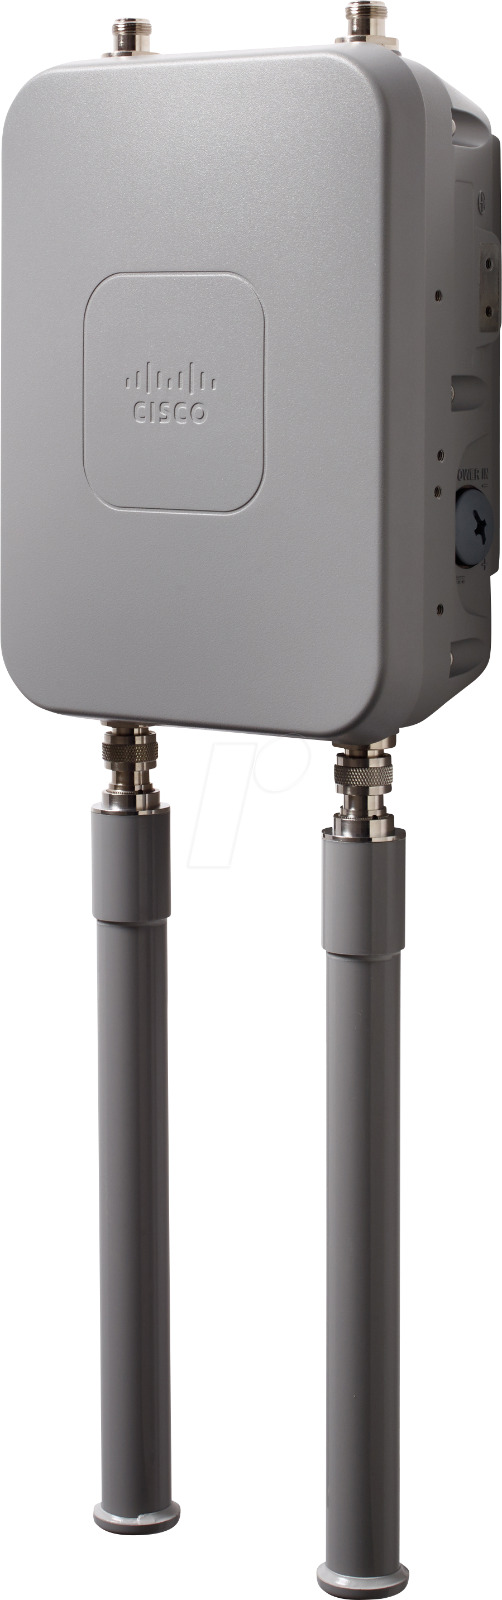 CISCO AIR-AP1562E-B-K9 Aironet Outdoor Access Point With 2 Antenna